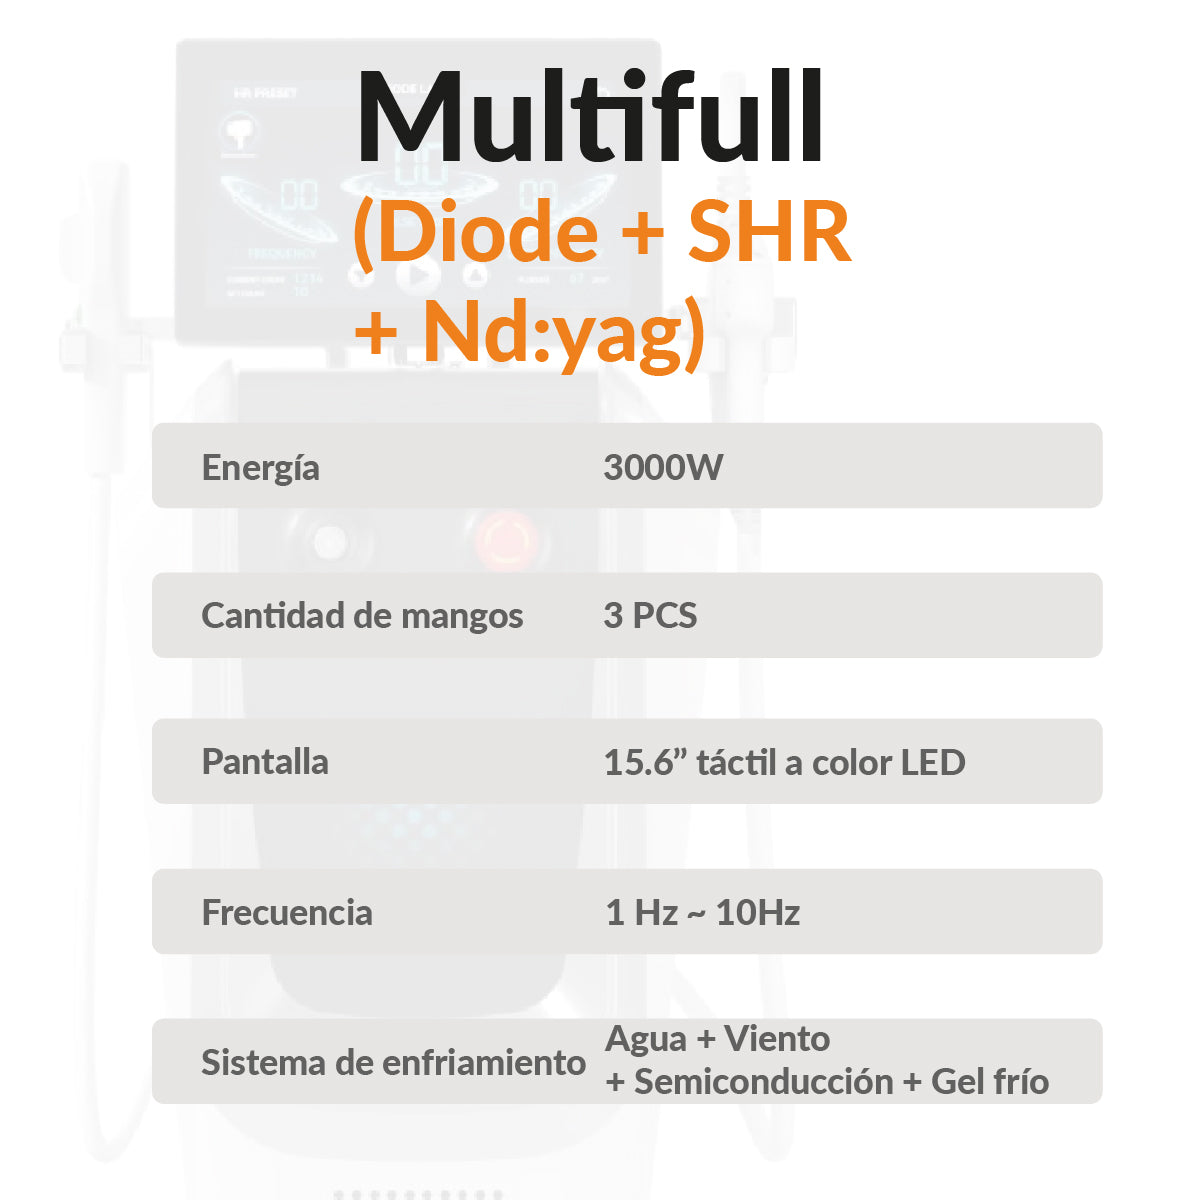 Multifull(Diode + SHR + Nd:yag)